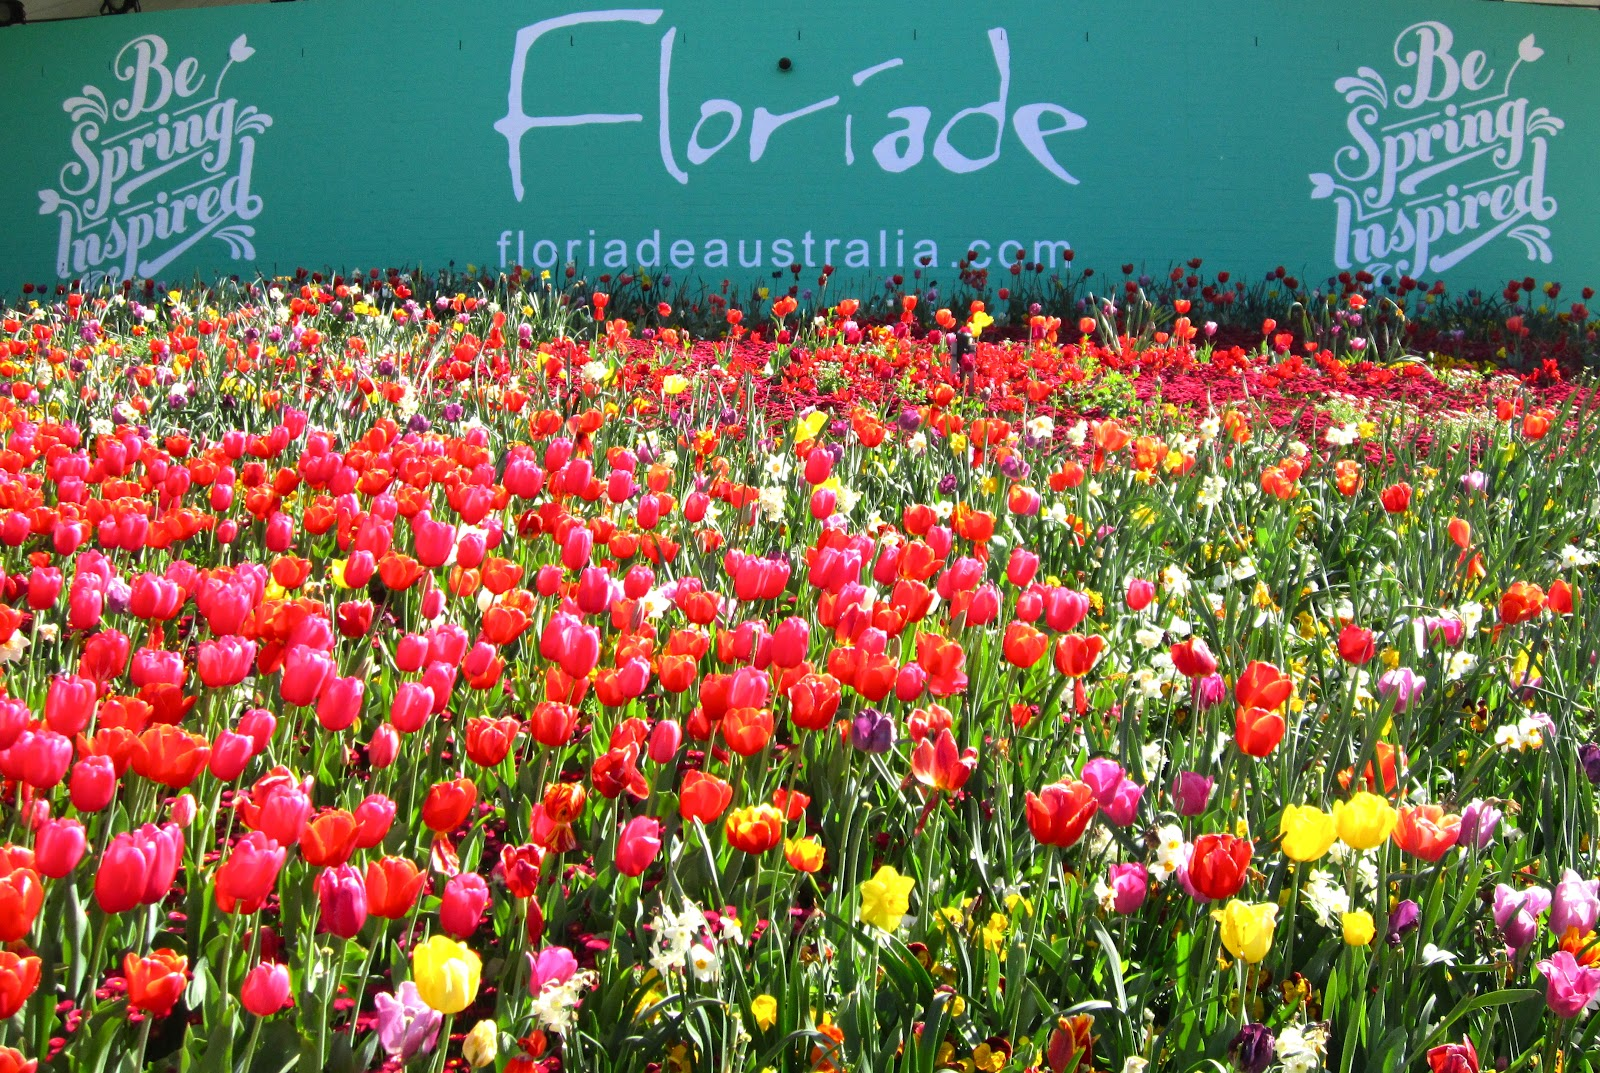 Du lịch Úc khám phá lễ hội Floriade, Canberra | TOPTOUR